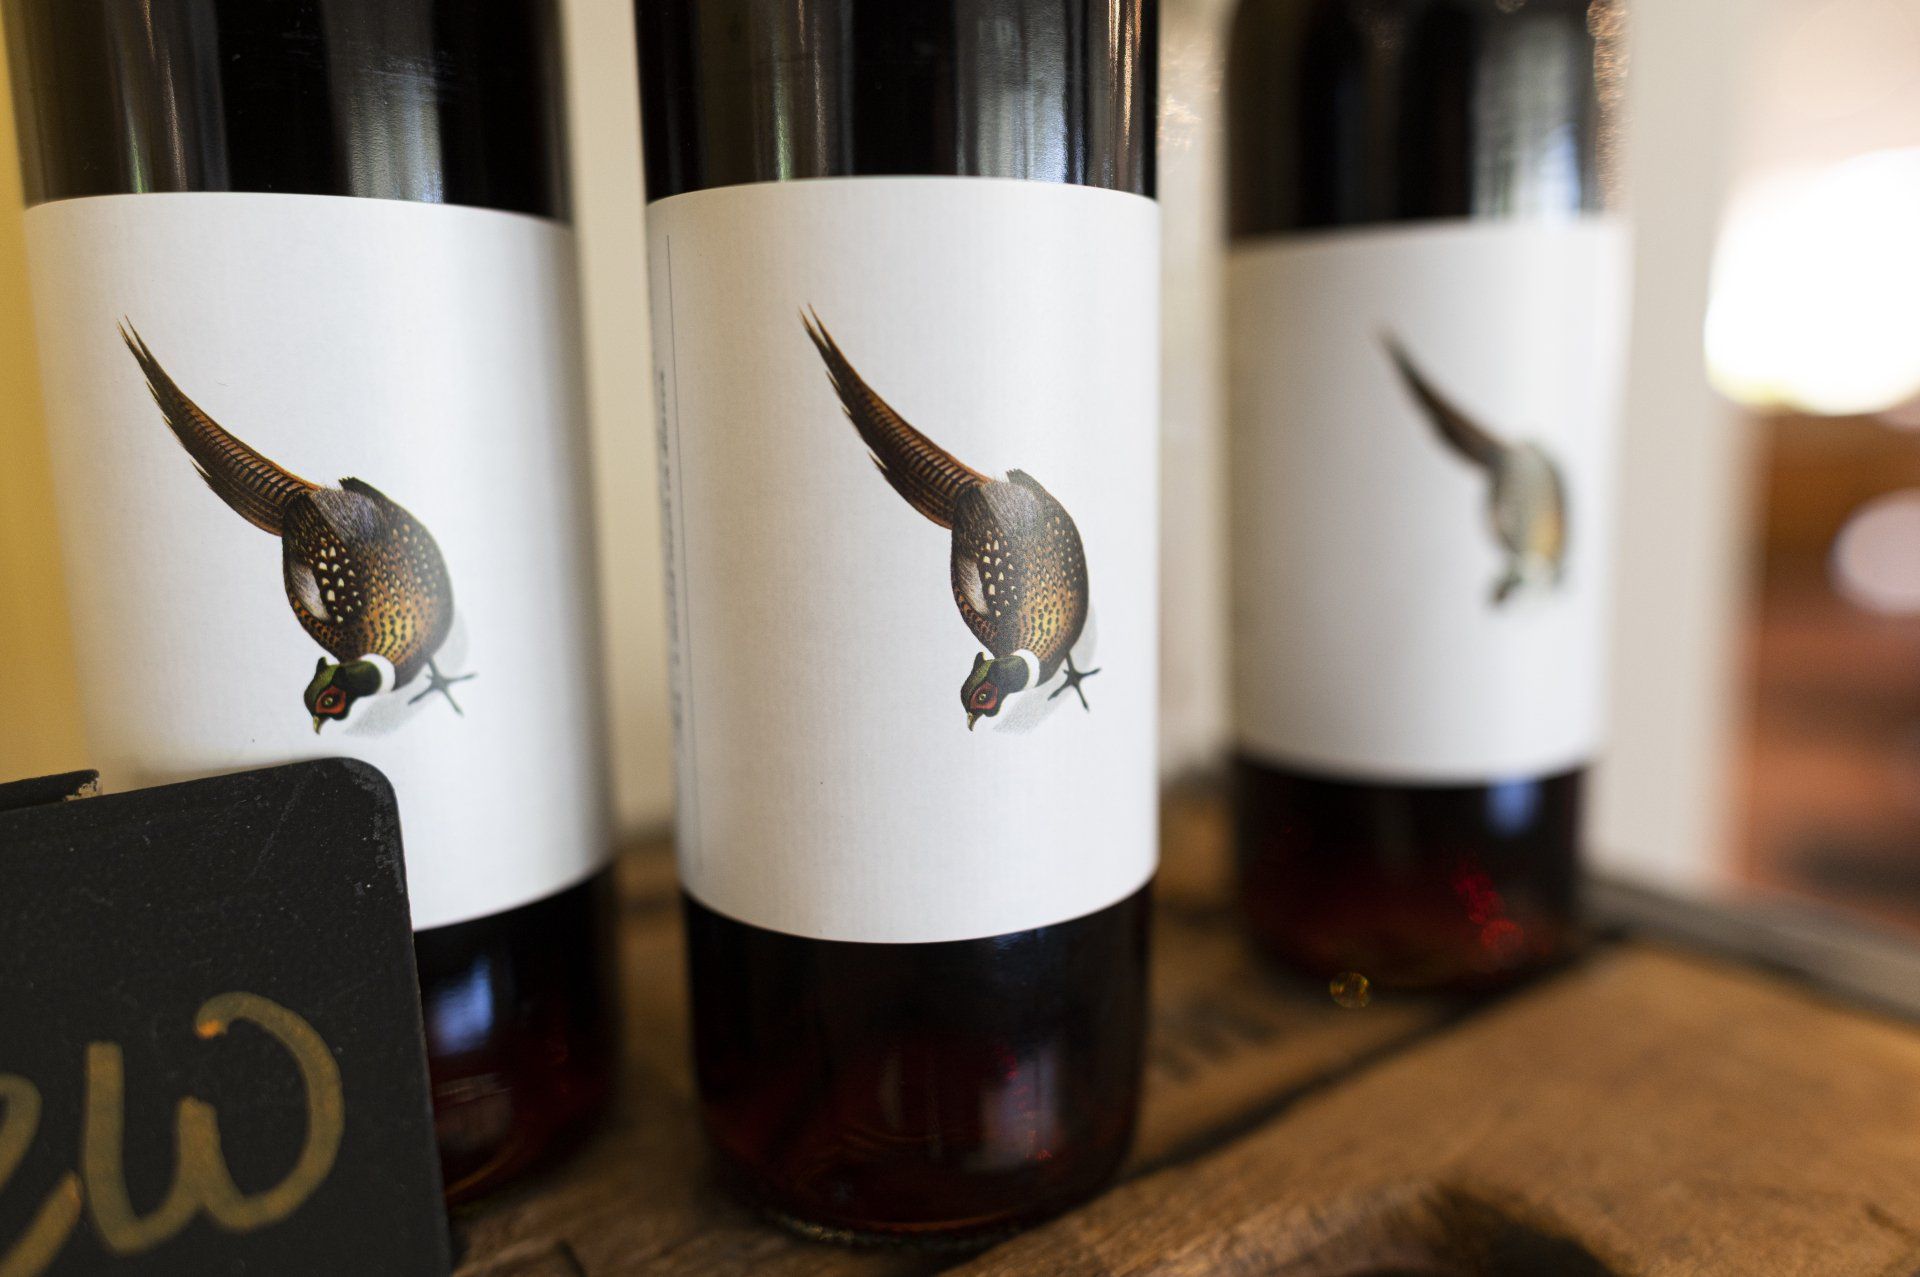 Pheasant Farm Wines Tasting Experience